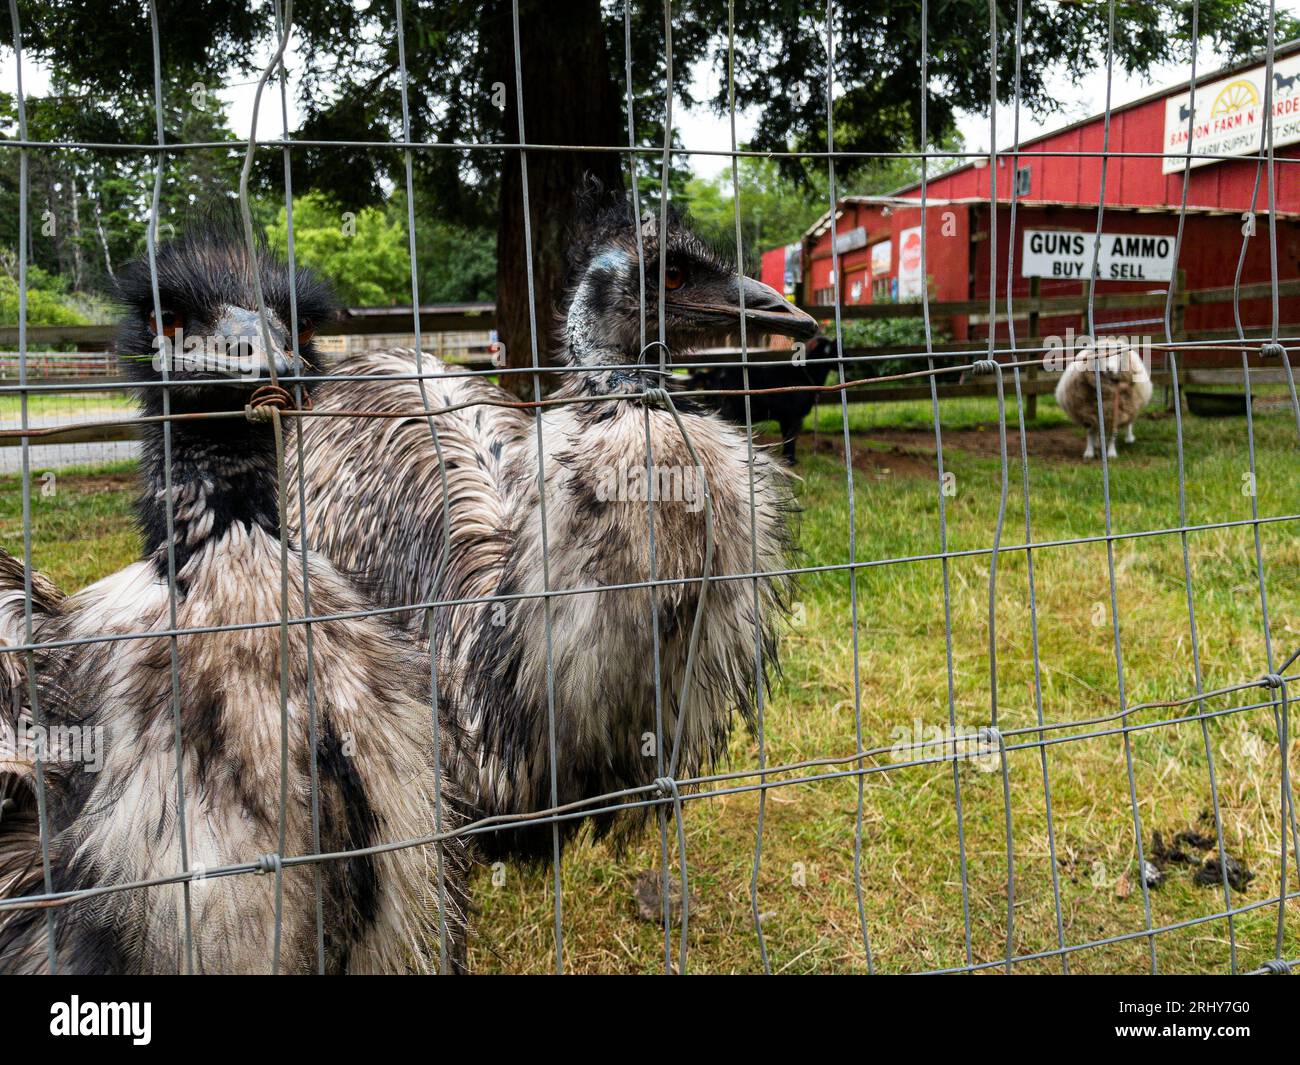 Emus and sheep in pen at gun shop in Bandon, Oregon Stock Photo